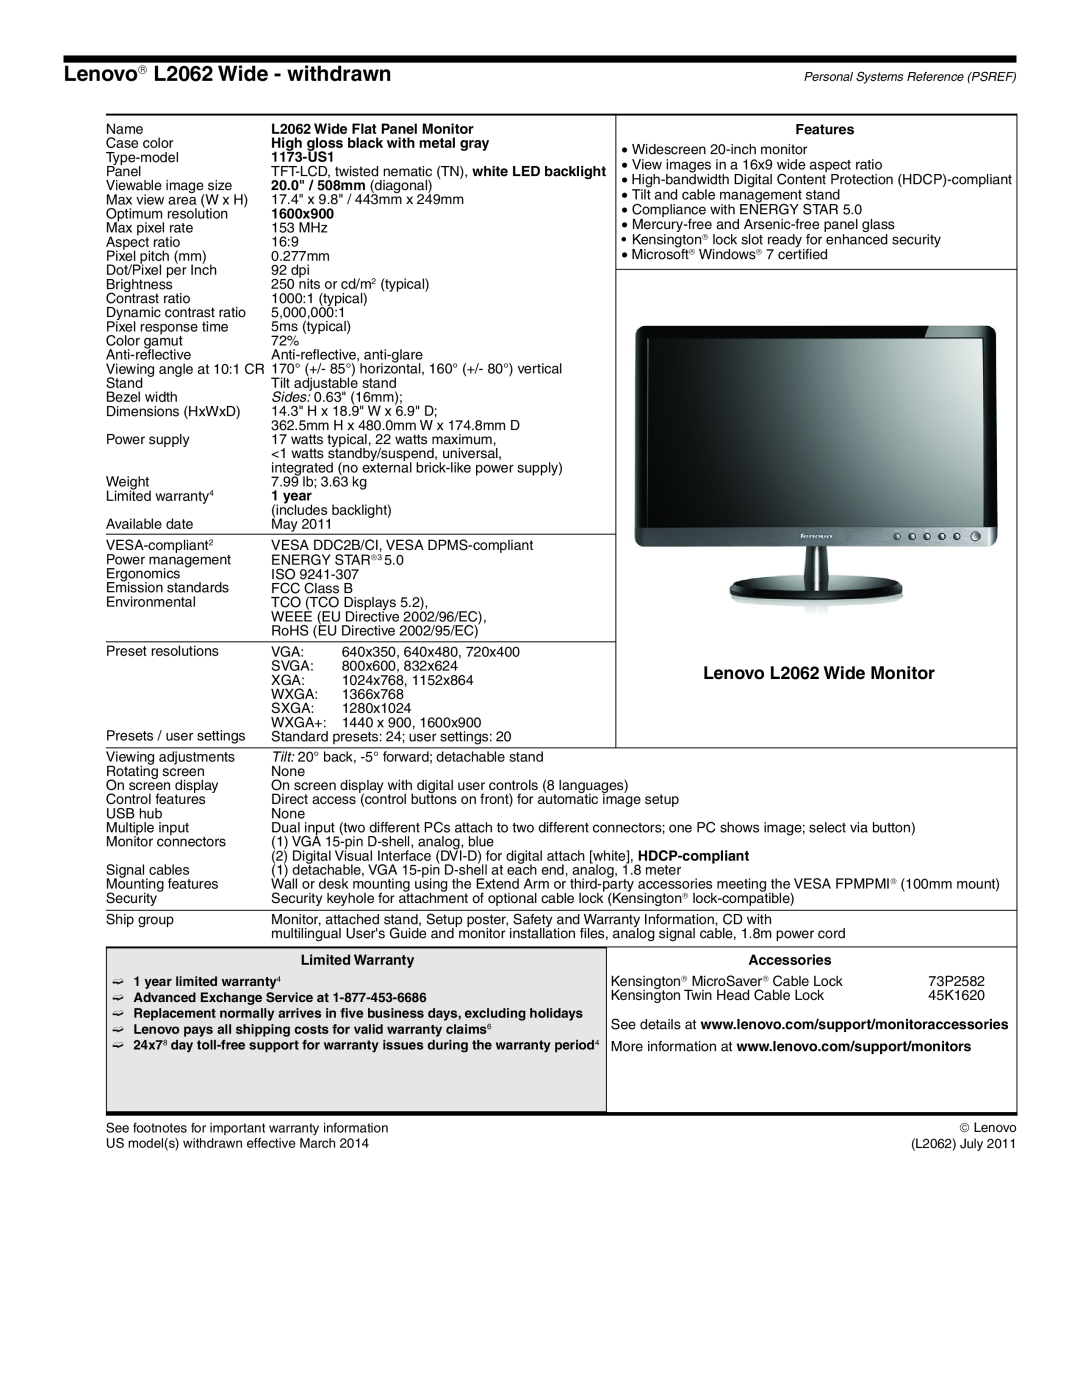 Lenovo L2363D manual Lenovo→ L2062 Wide - withdrawn, Lenovo L2062 Wide Monitor 